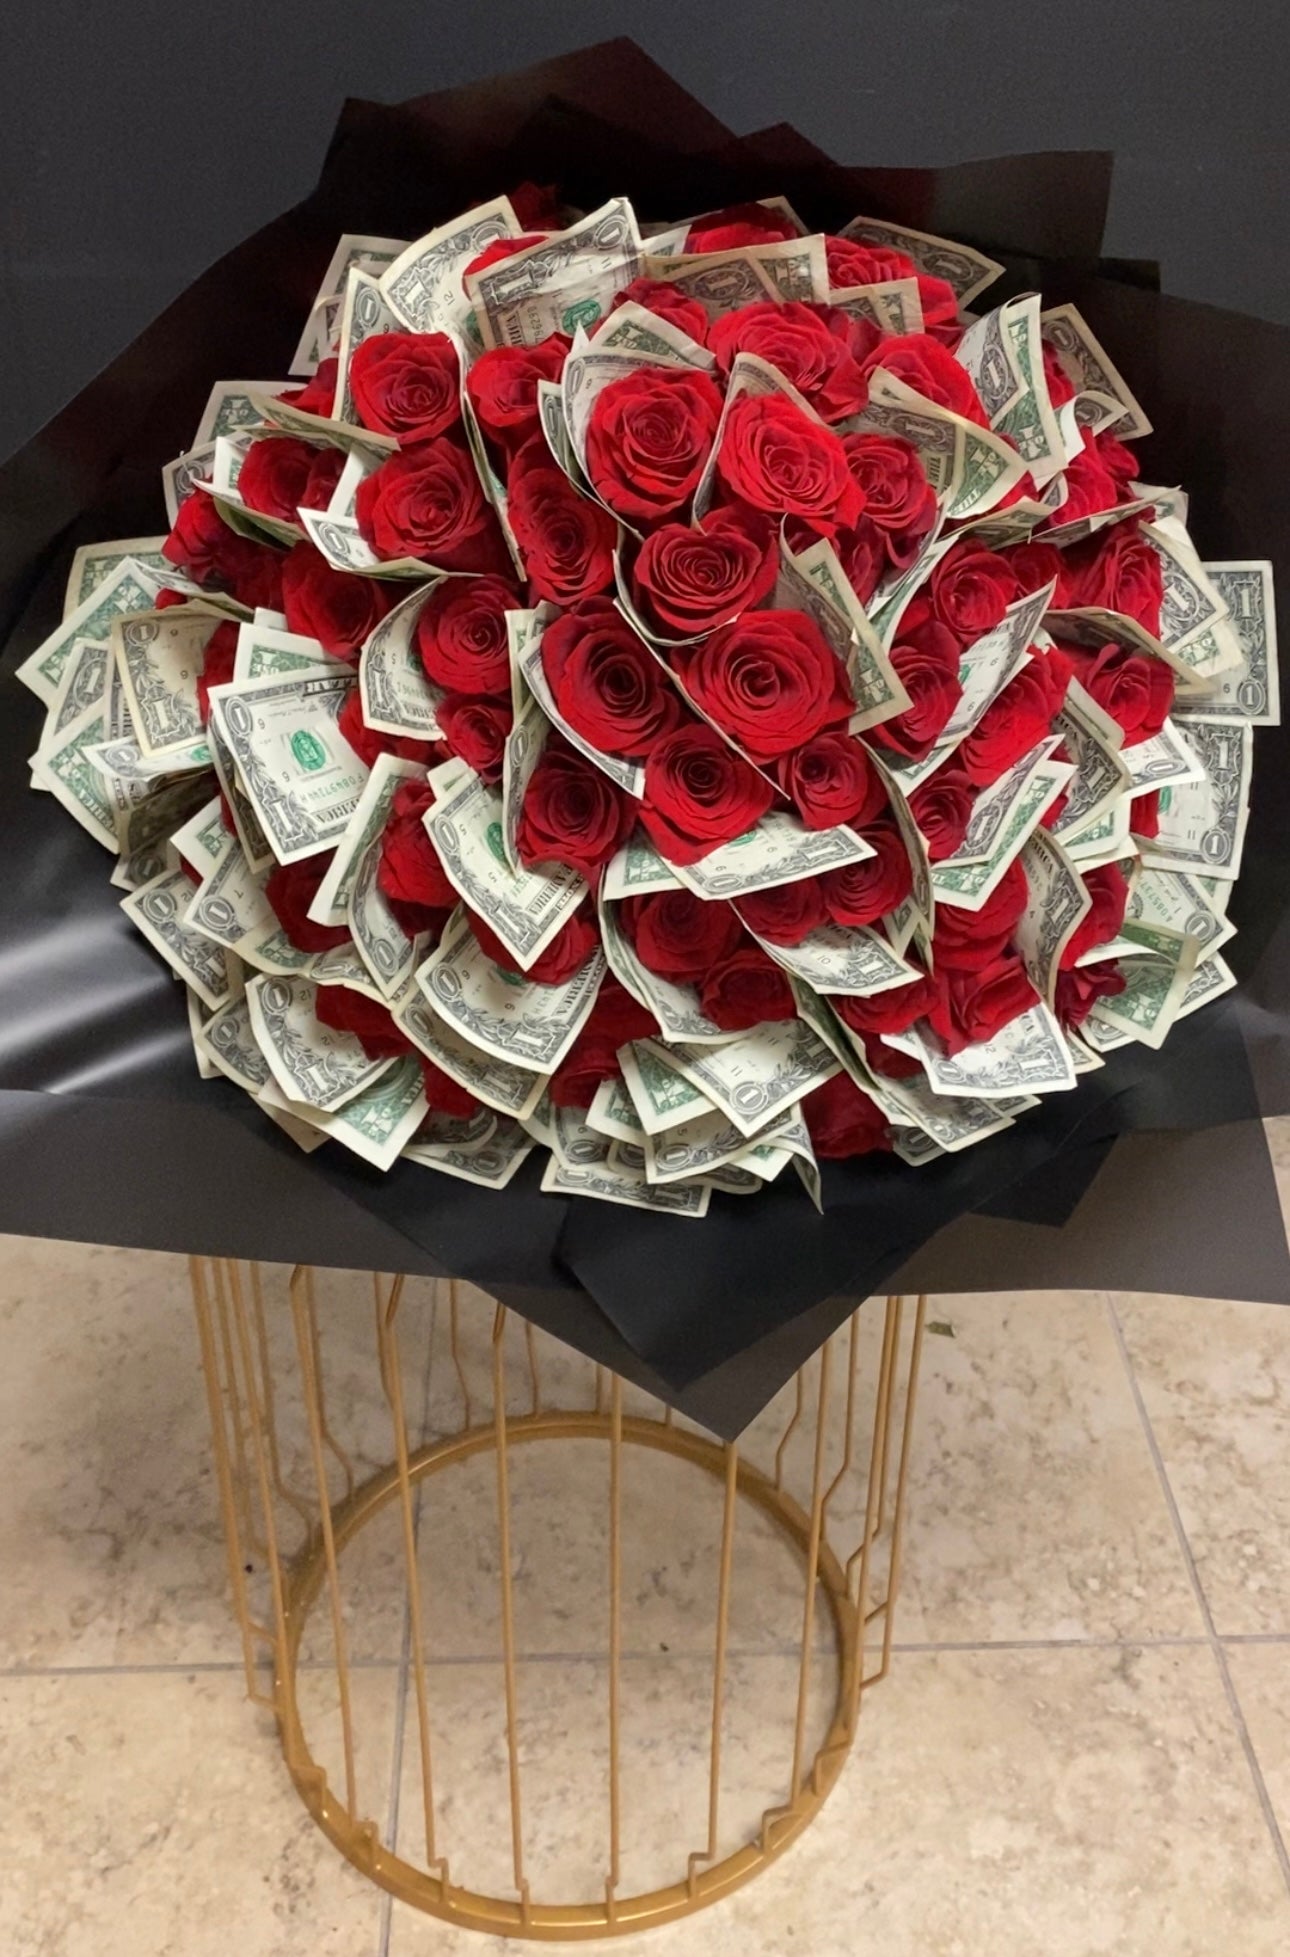 Birthday Money Flower Bouquet 10/18/17 LA❤️ #flowers #money #roses